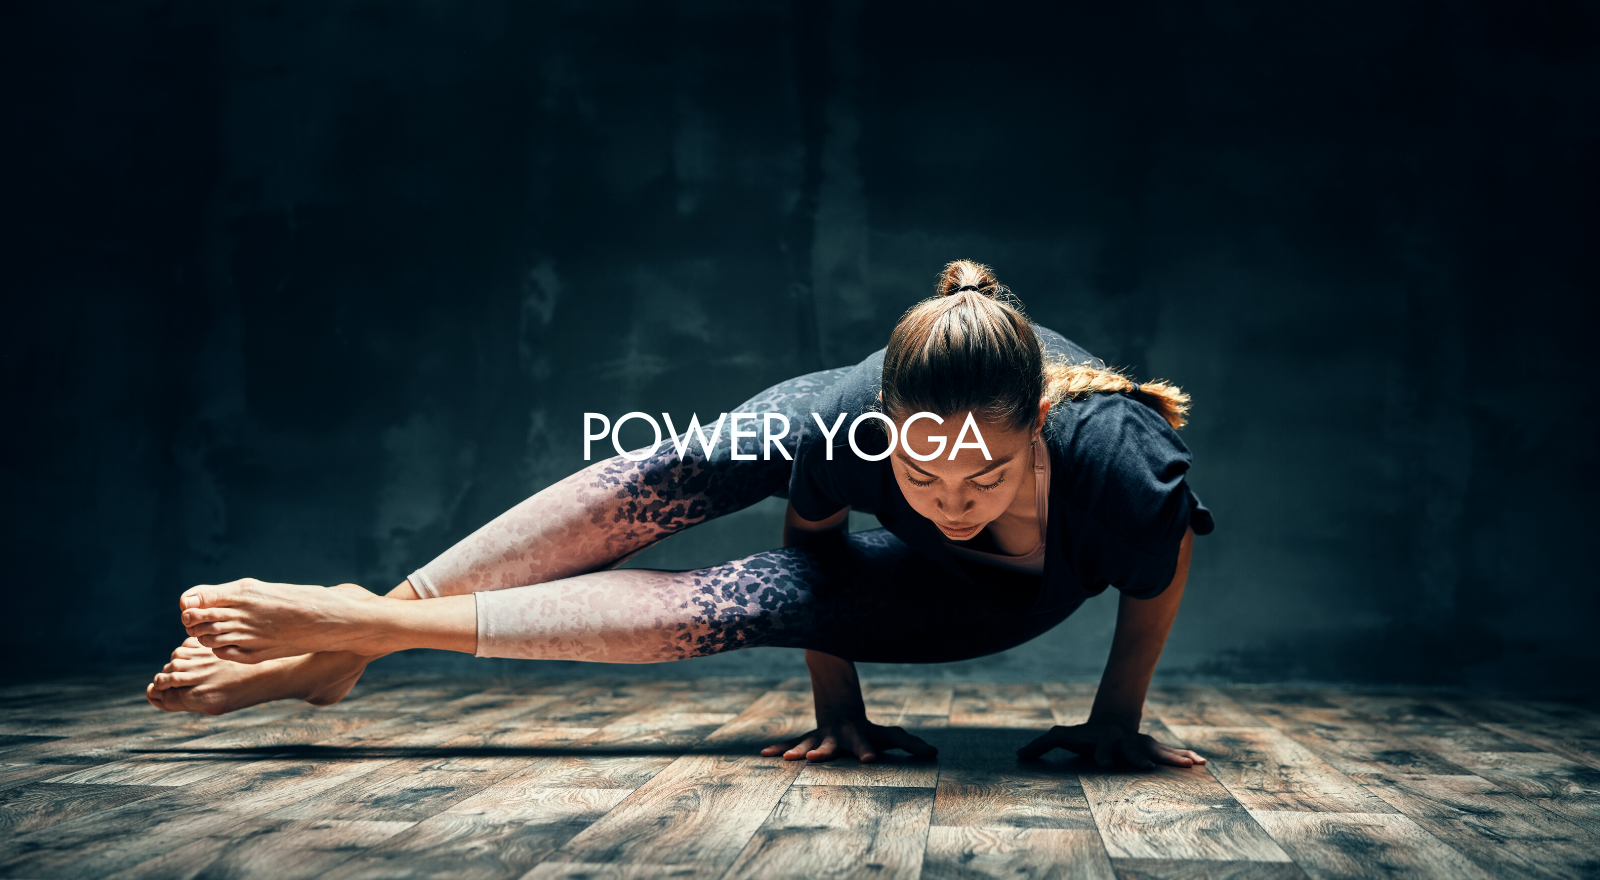 power yoga, ashtanga yoga, astanga yoga, strength yoga, exeter golf and country club, power yoga classes